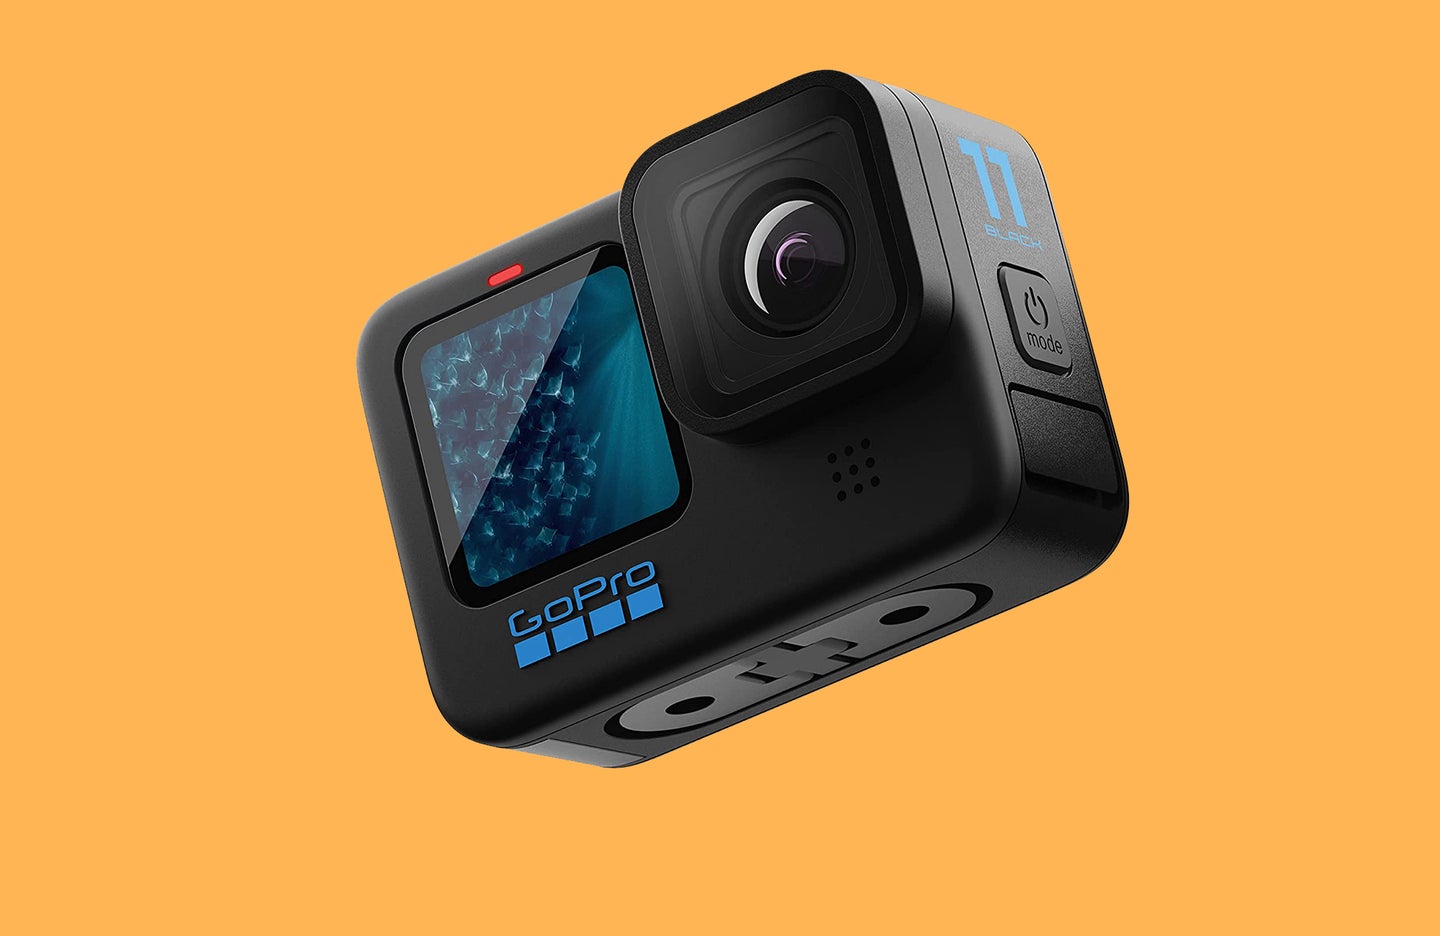 GoPro action cameras